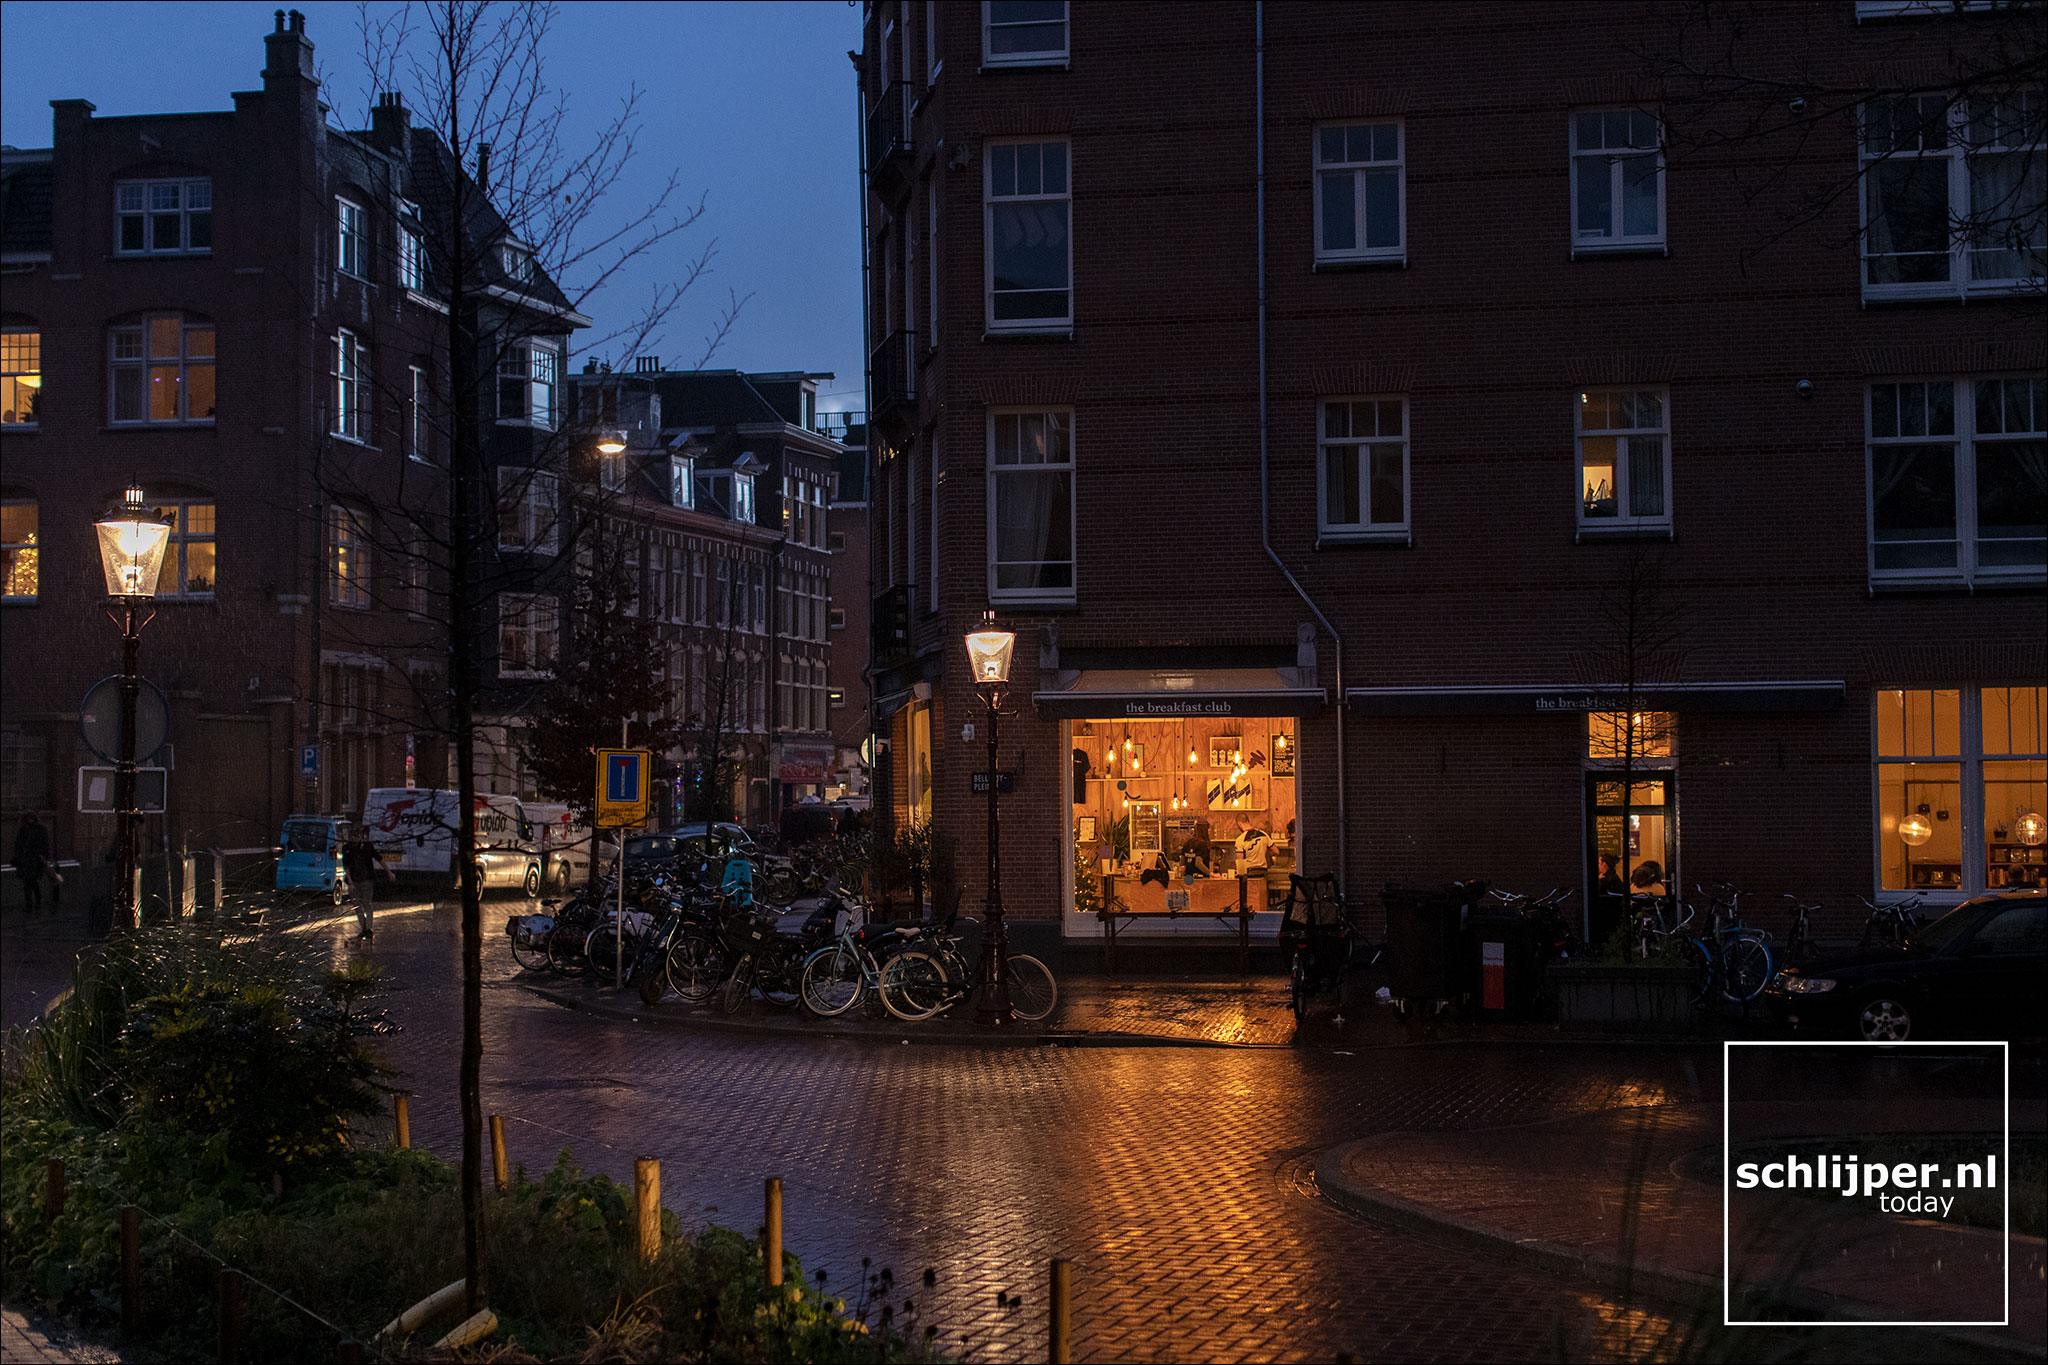 Nederland, Amsterdam, 14 december 2019